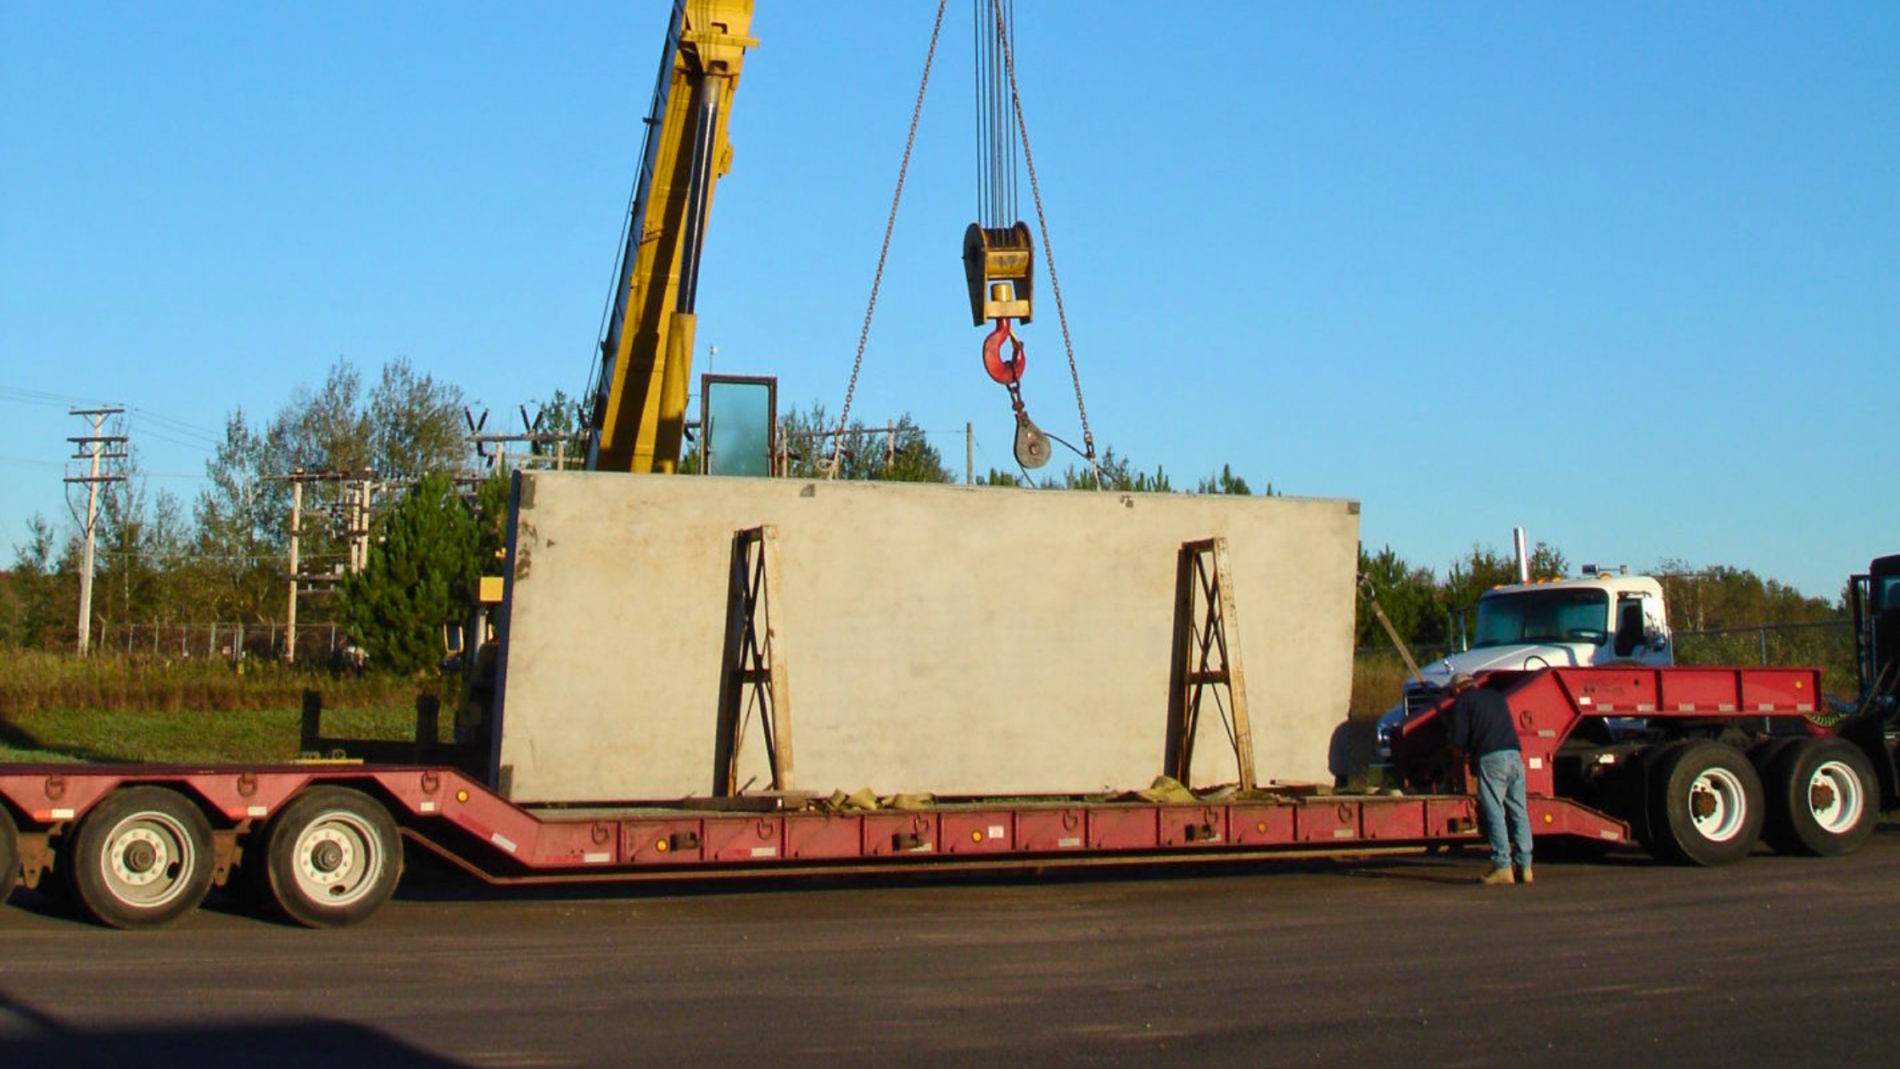 Precast concrete loaded onto a truck